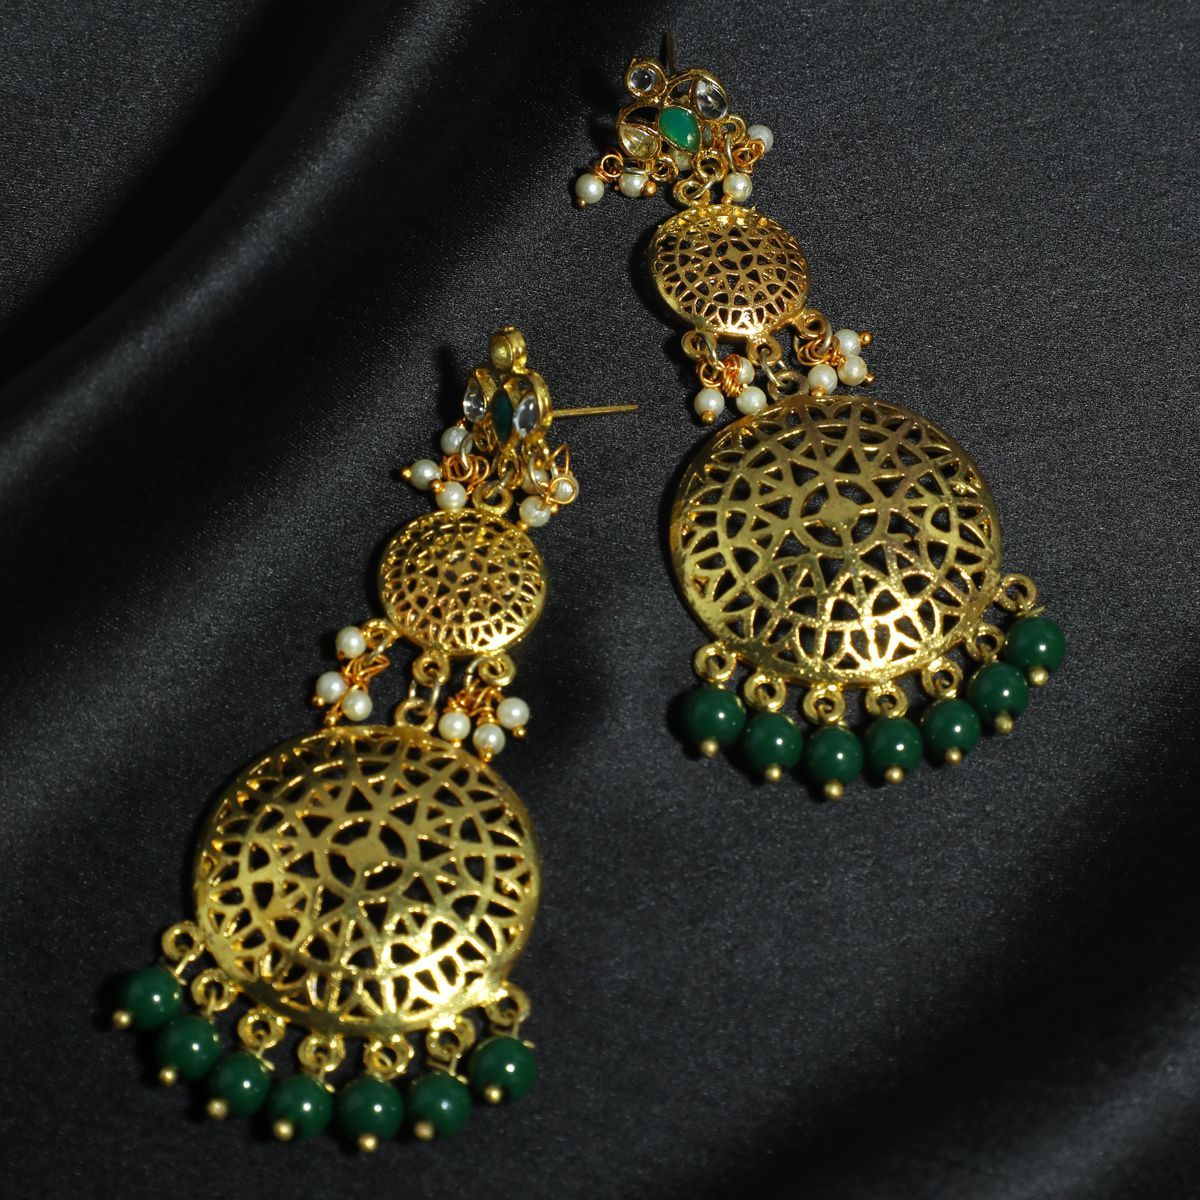 Details more than 70 dark green colour earrings best